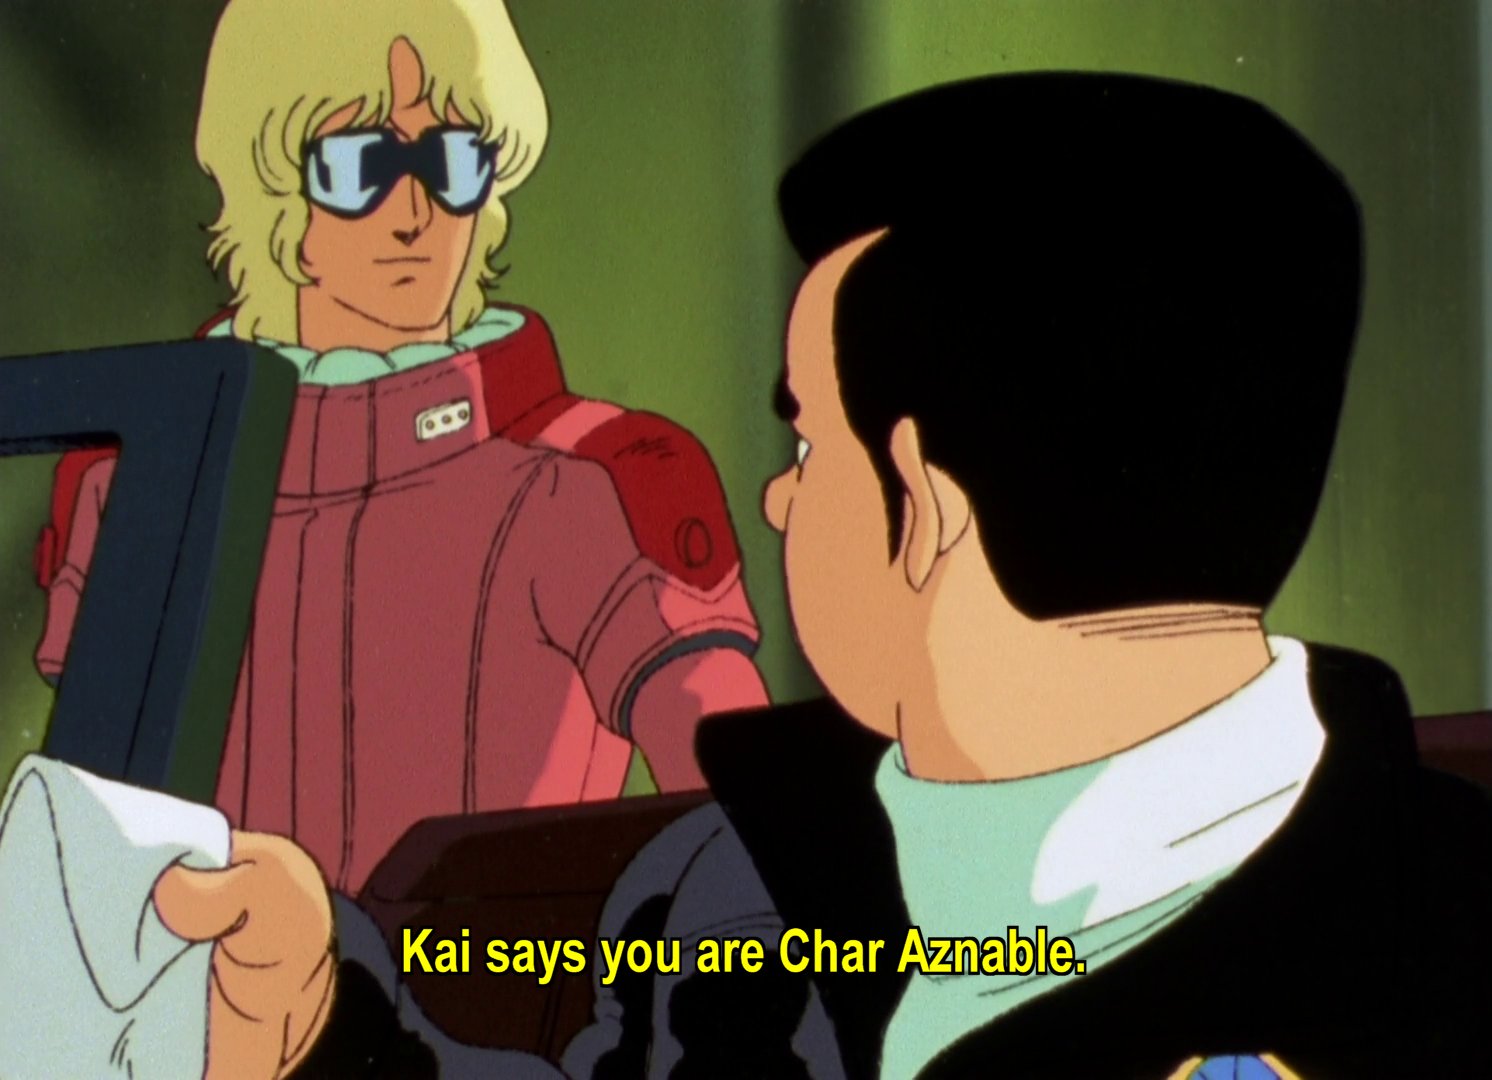 Kobayashi: Kai says you are Char Aznable.